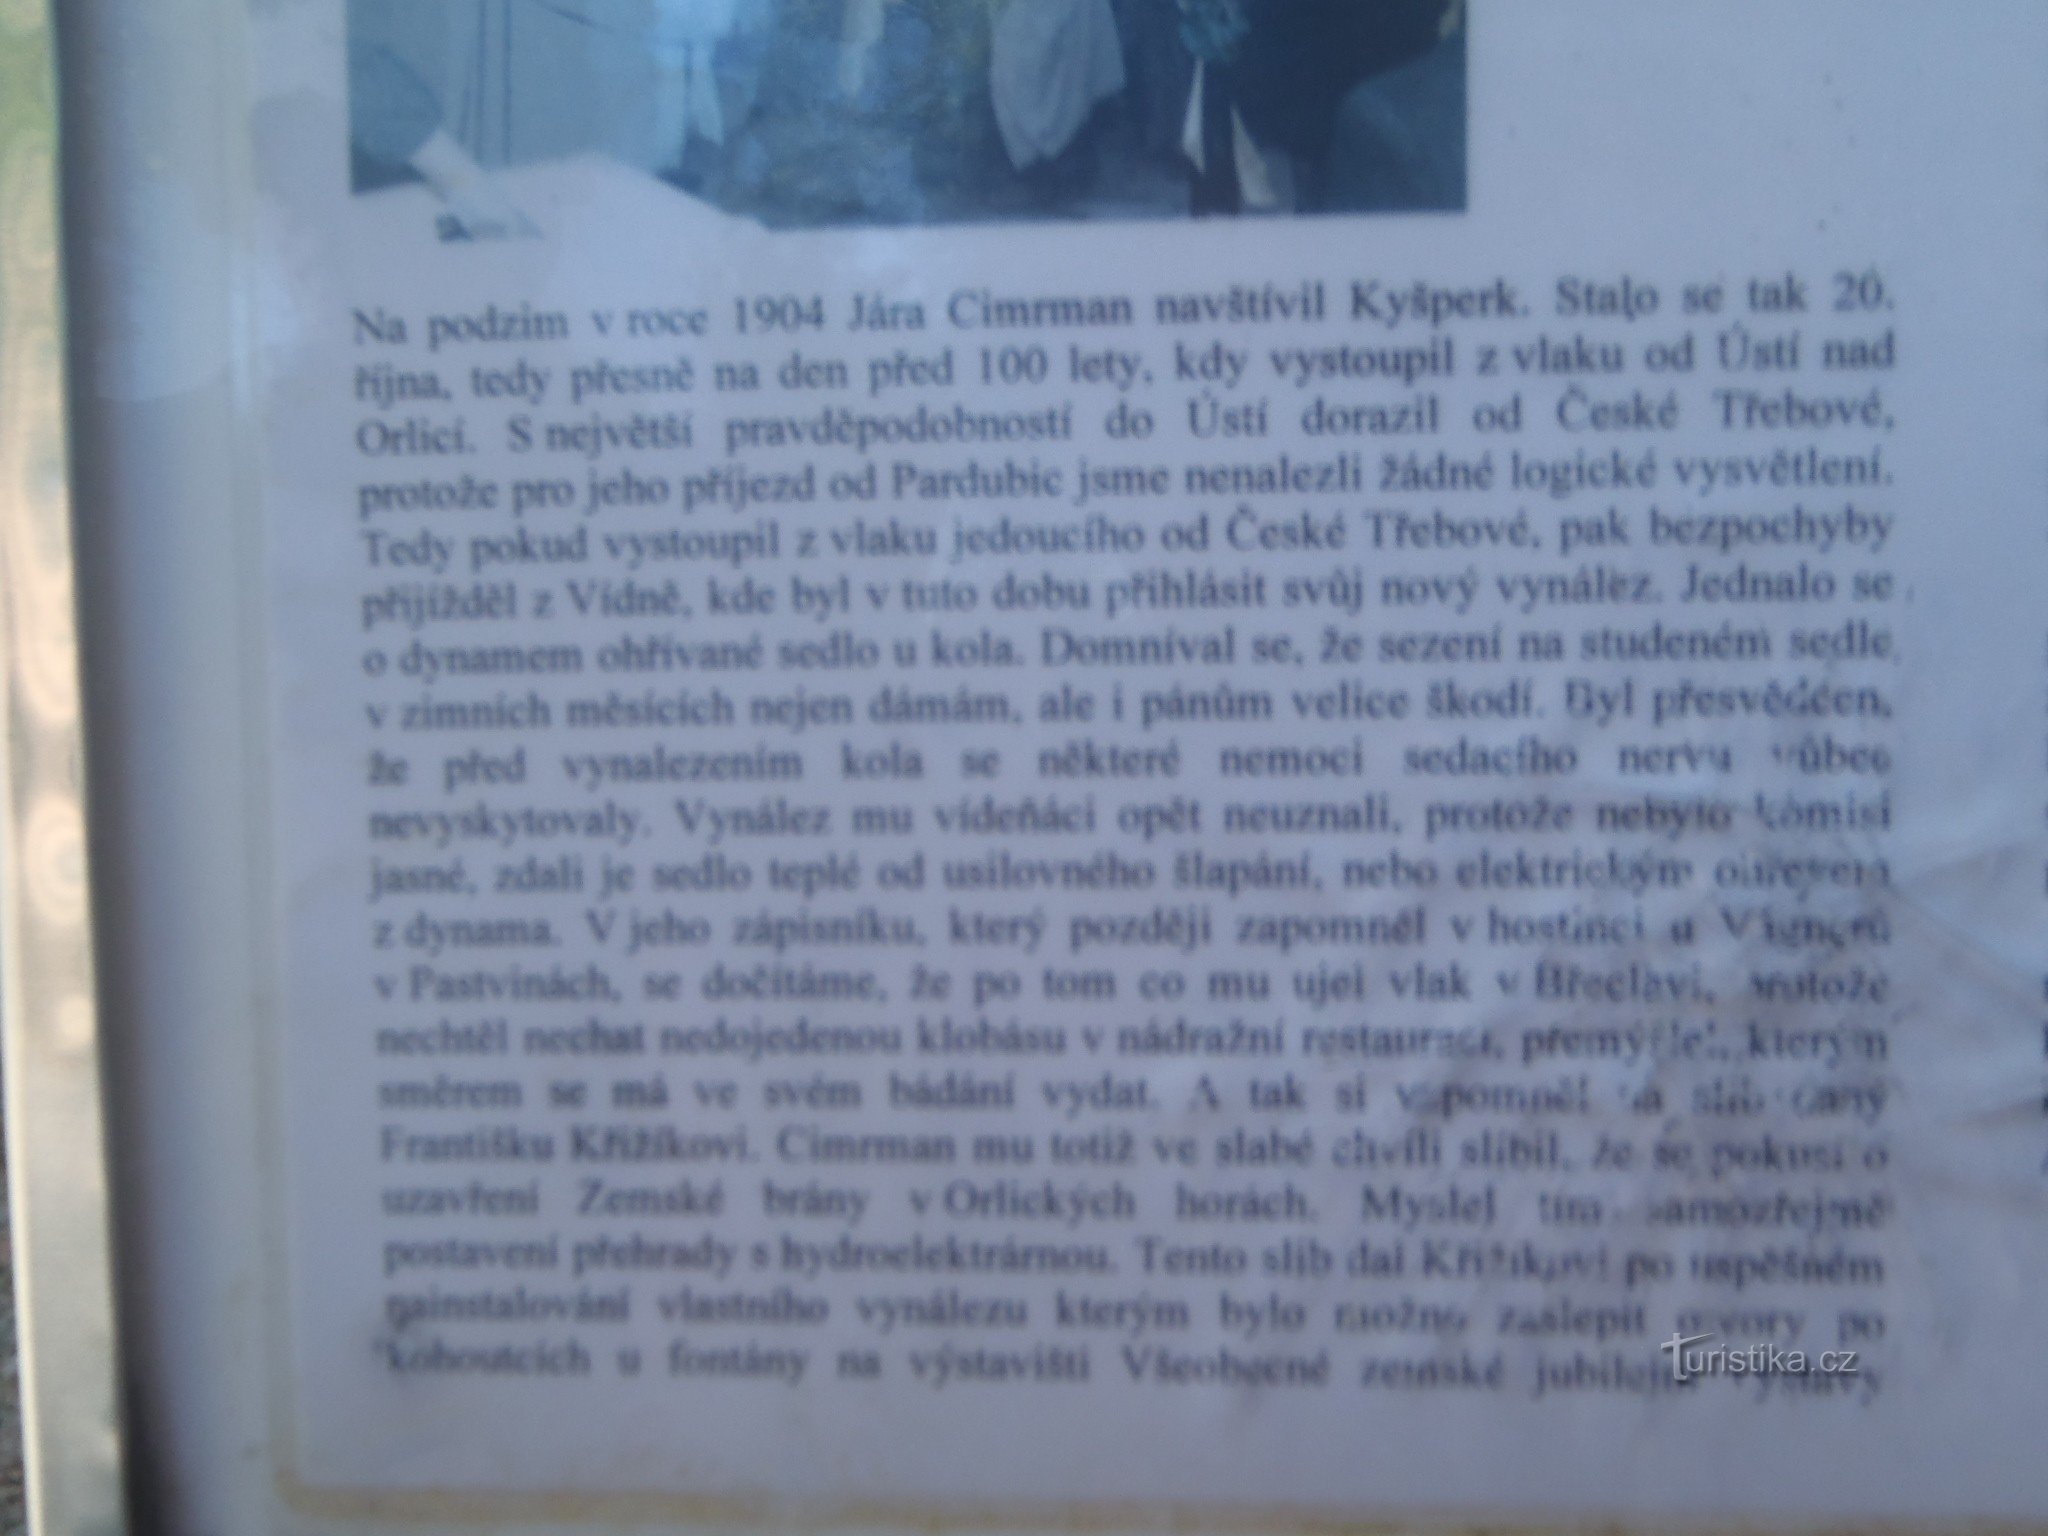 About Cimrman in Kyšperk 1